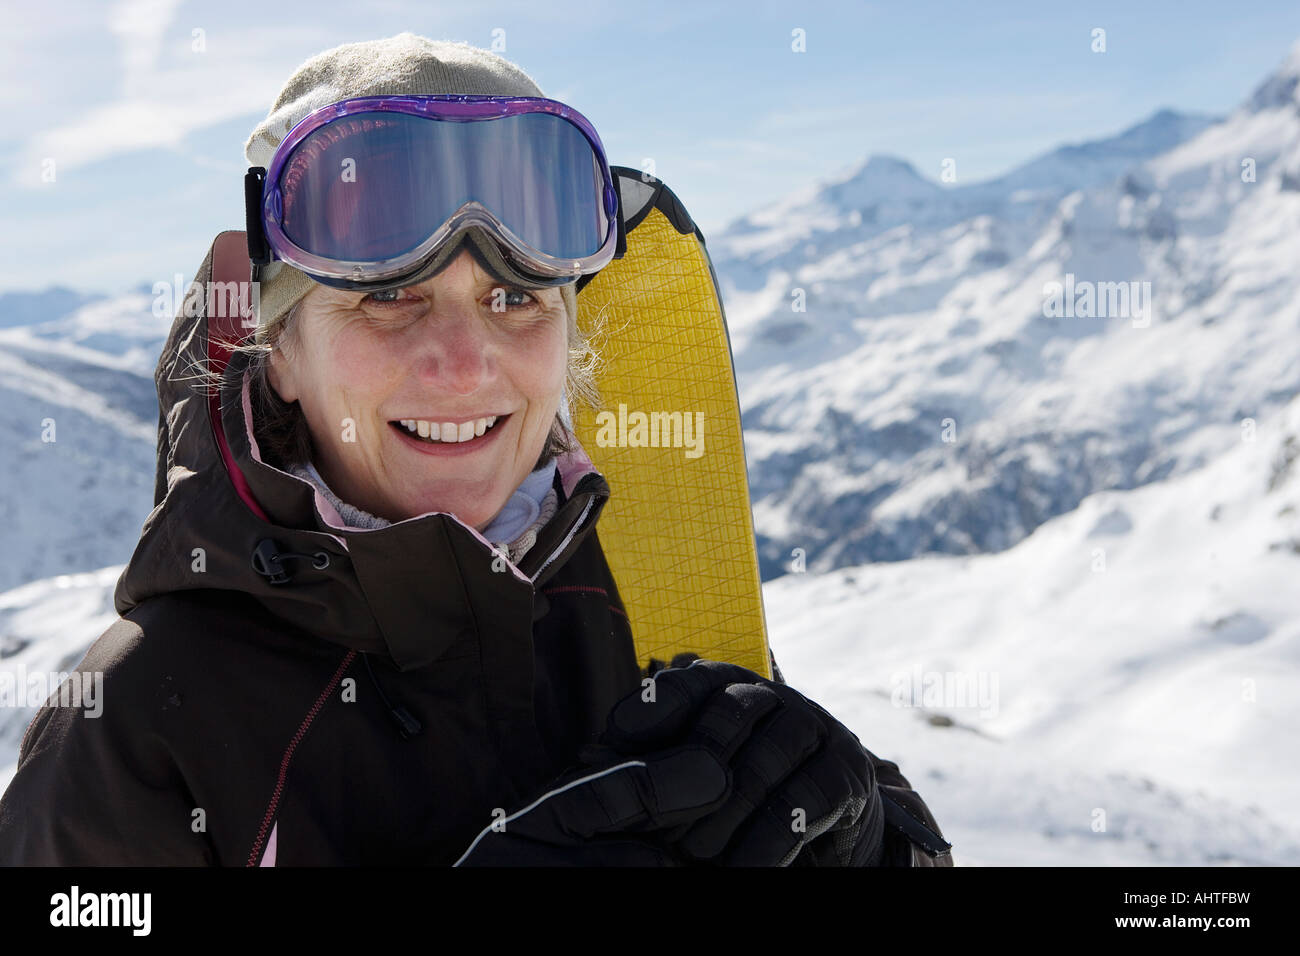 Mature female skier holding Skis on mountain, close-up, portrait Stock Photo